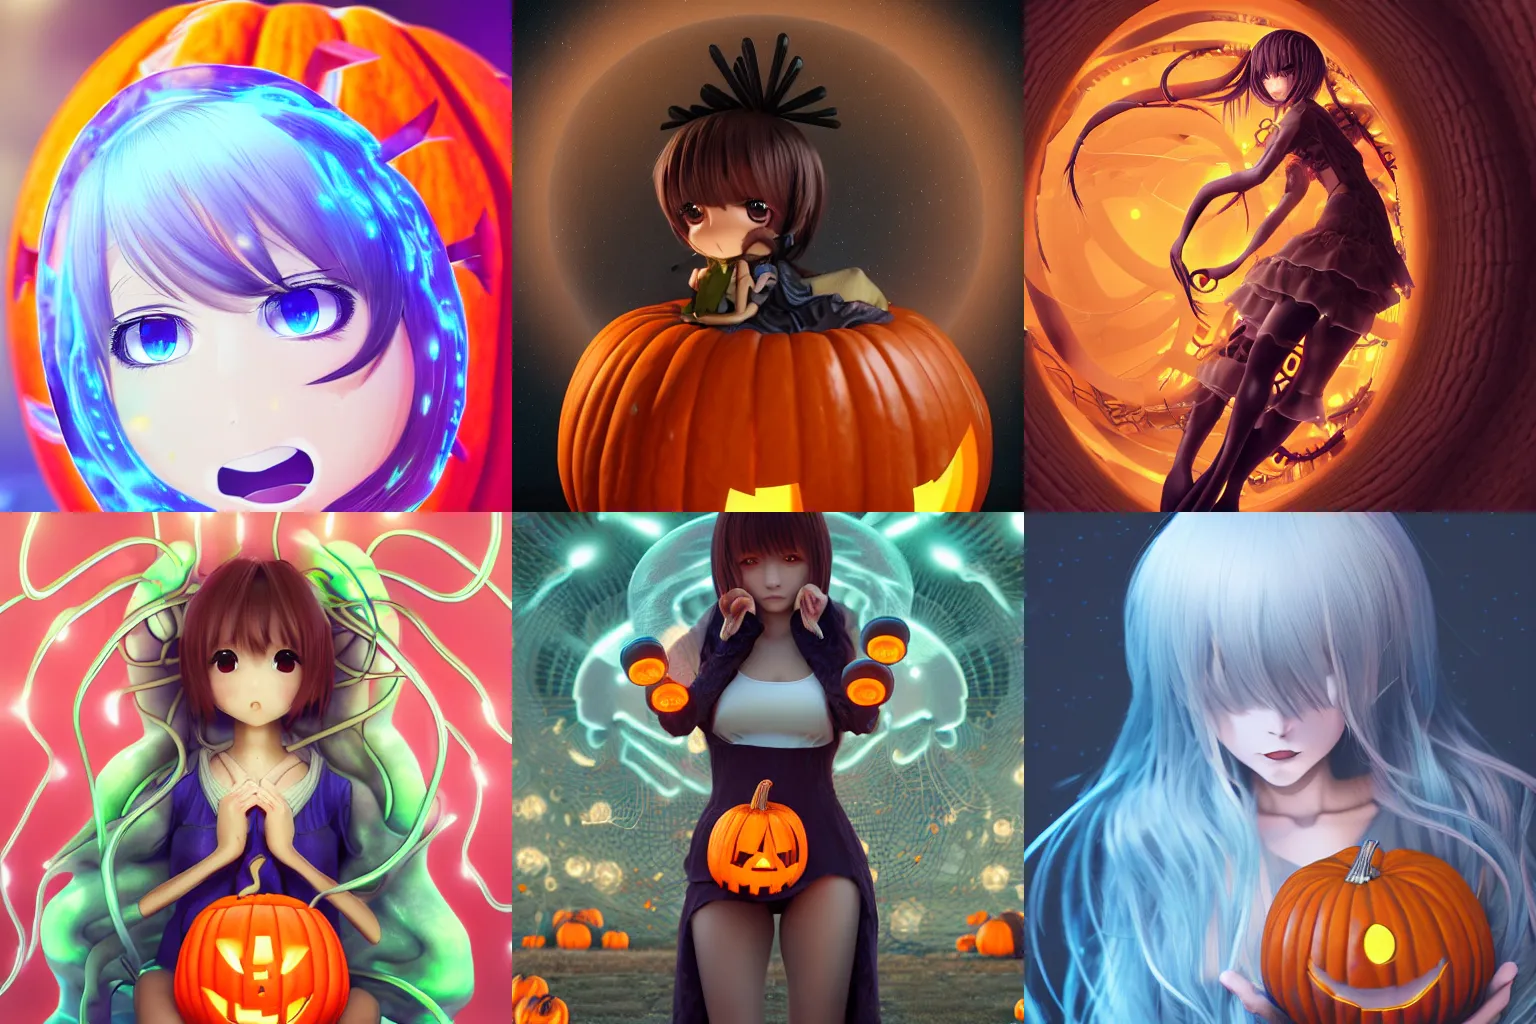 Prompt: intricate anime girl wearing a pumpkin artwork jellyfish bio-mechanical bio-luminescence, octane render, trending on artstation, hyper realism, 8k, fractals, patterns